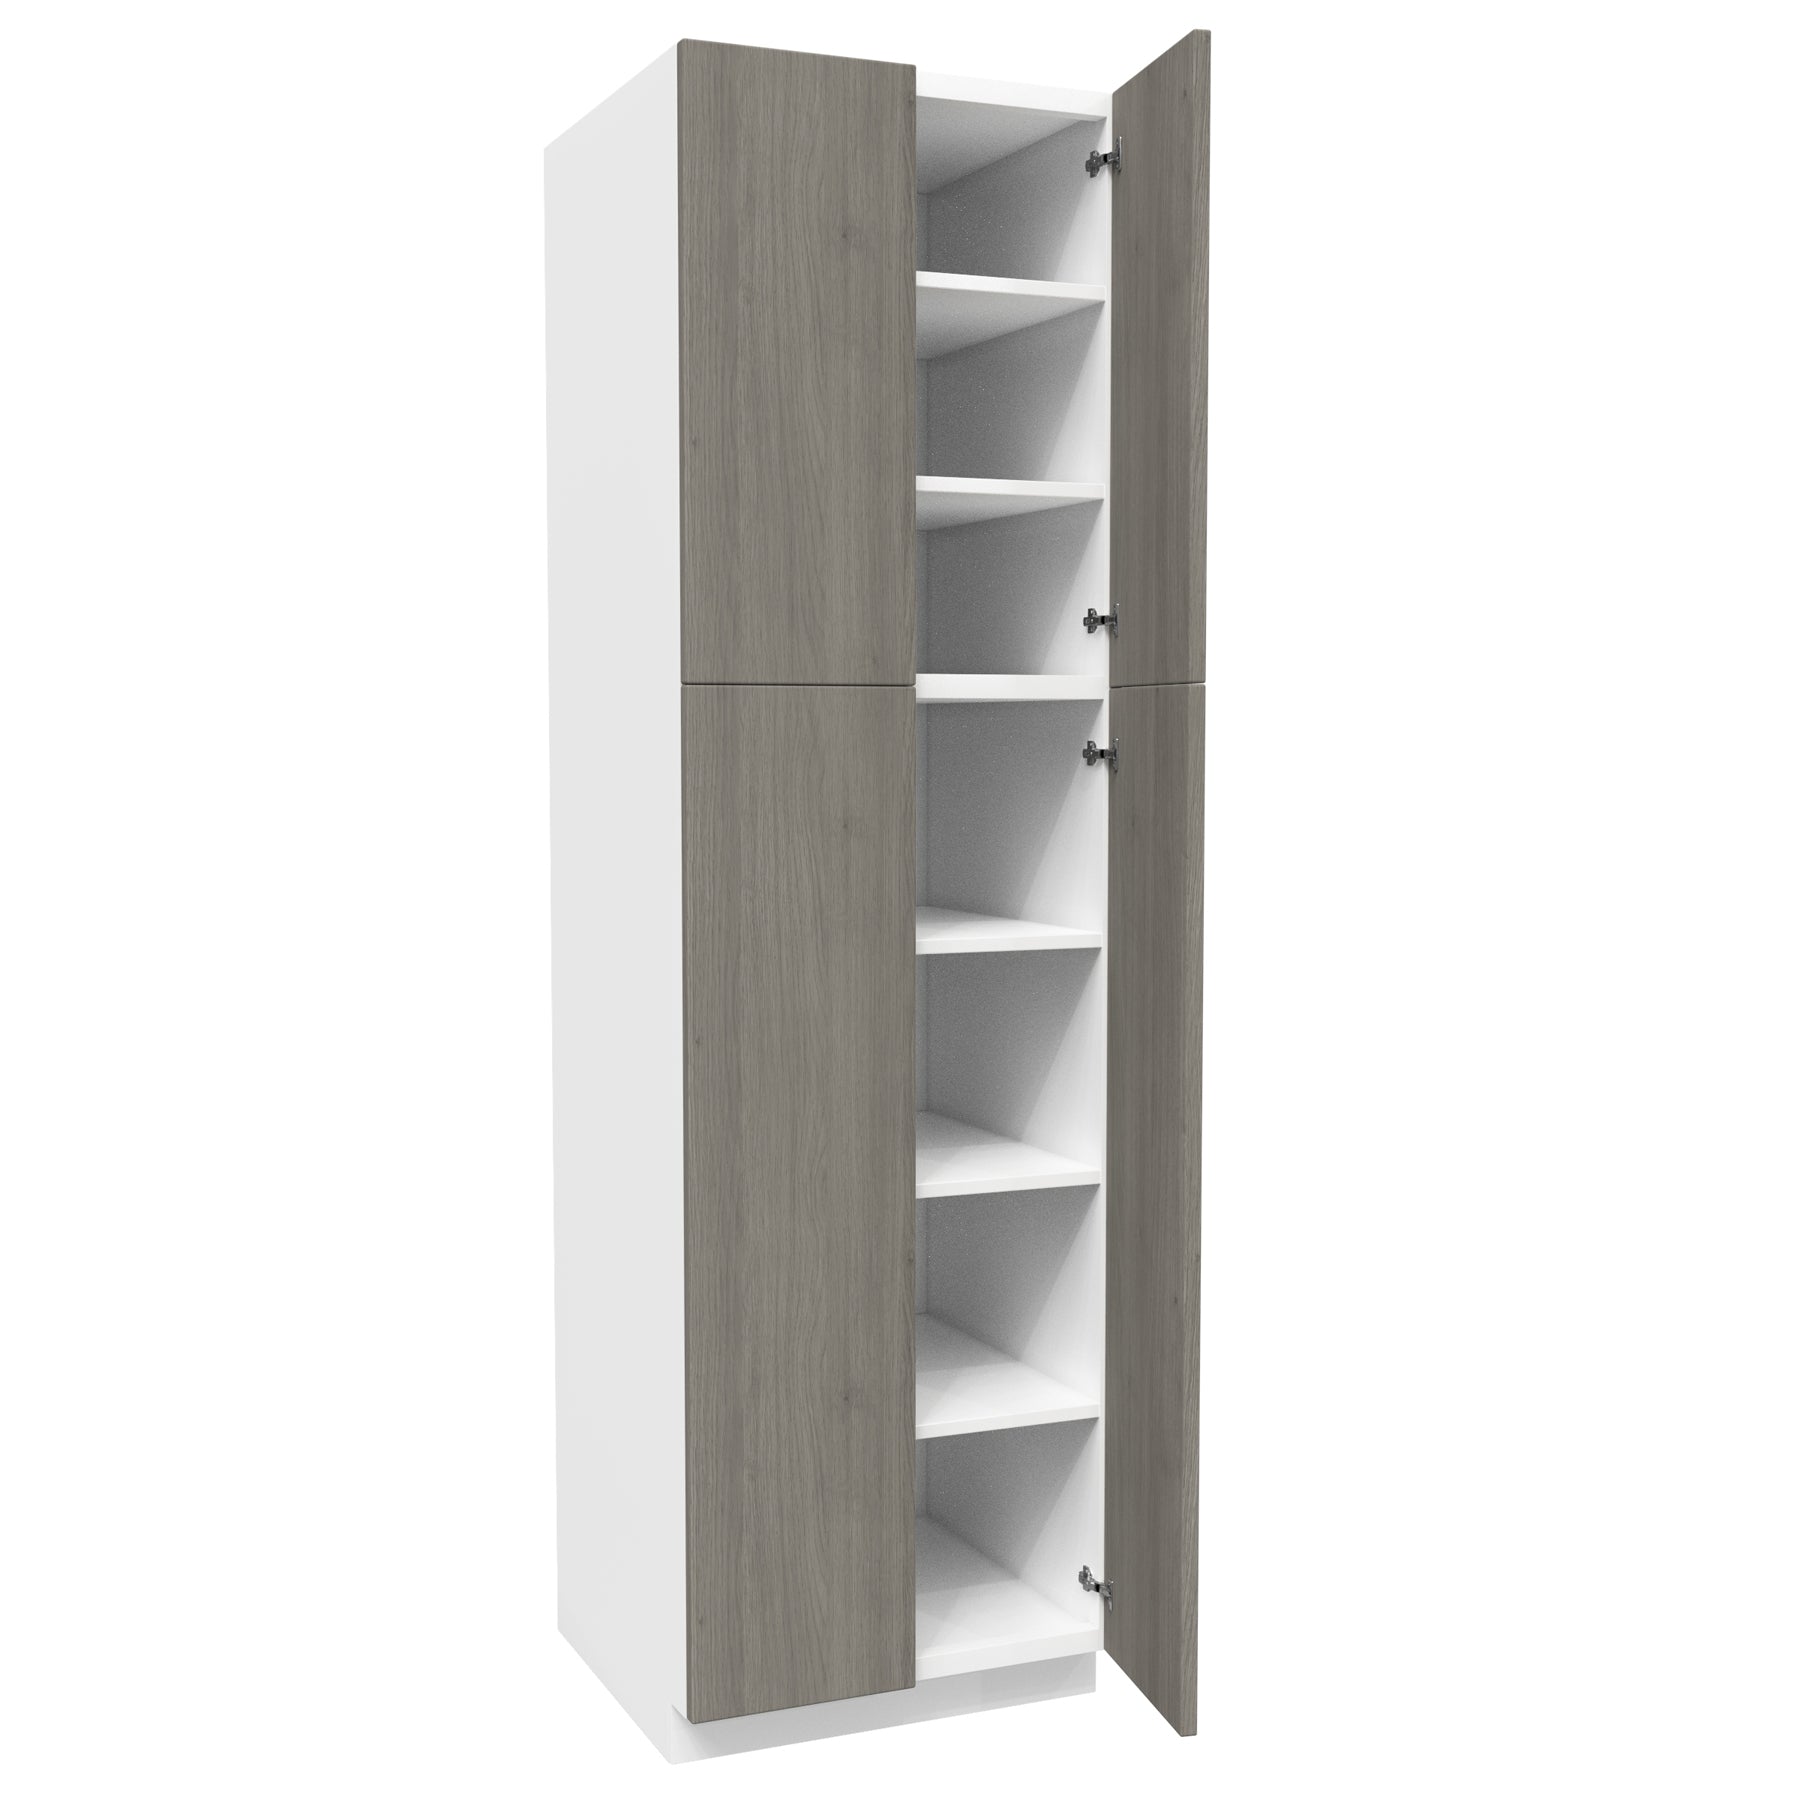 2 Door Utility Cabinet| Matrix Silver | 24W x 84H x 24D